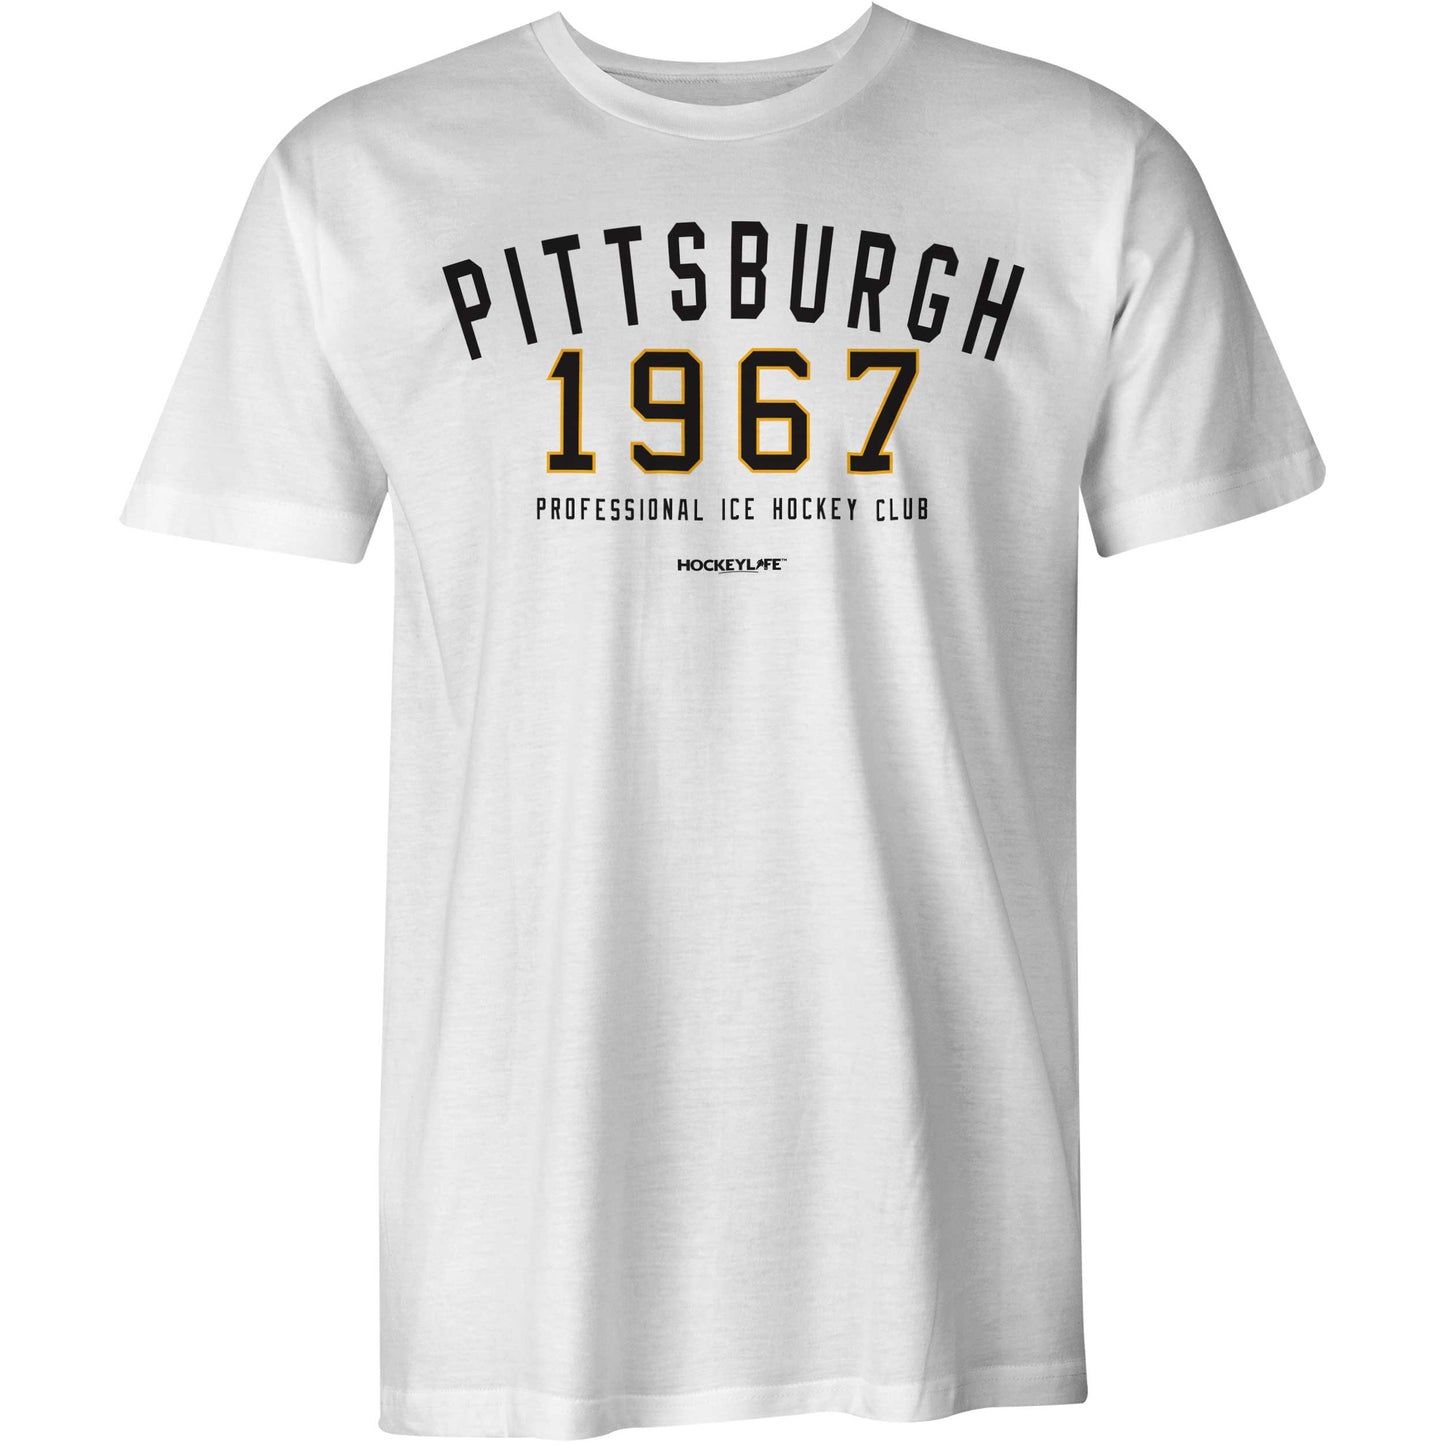 Pittsburgh Professional Hockey Club Tee Shirt (White)